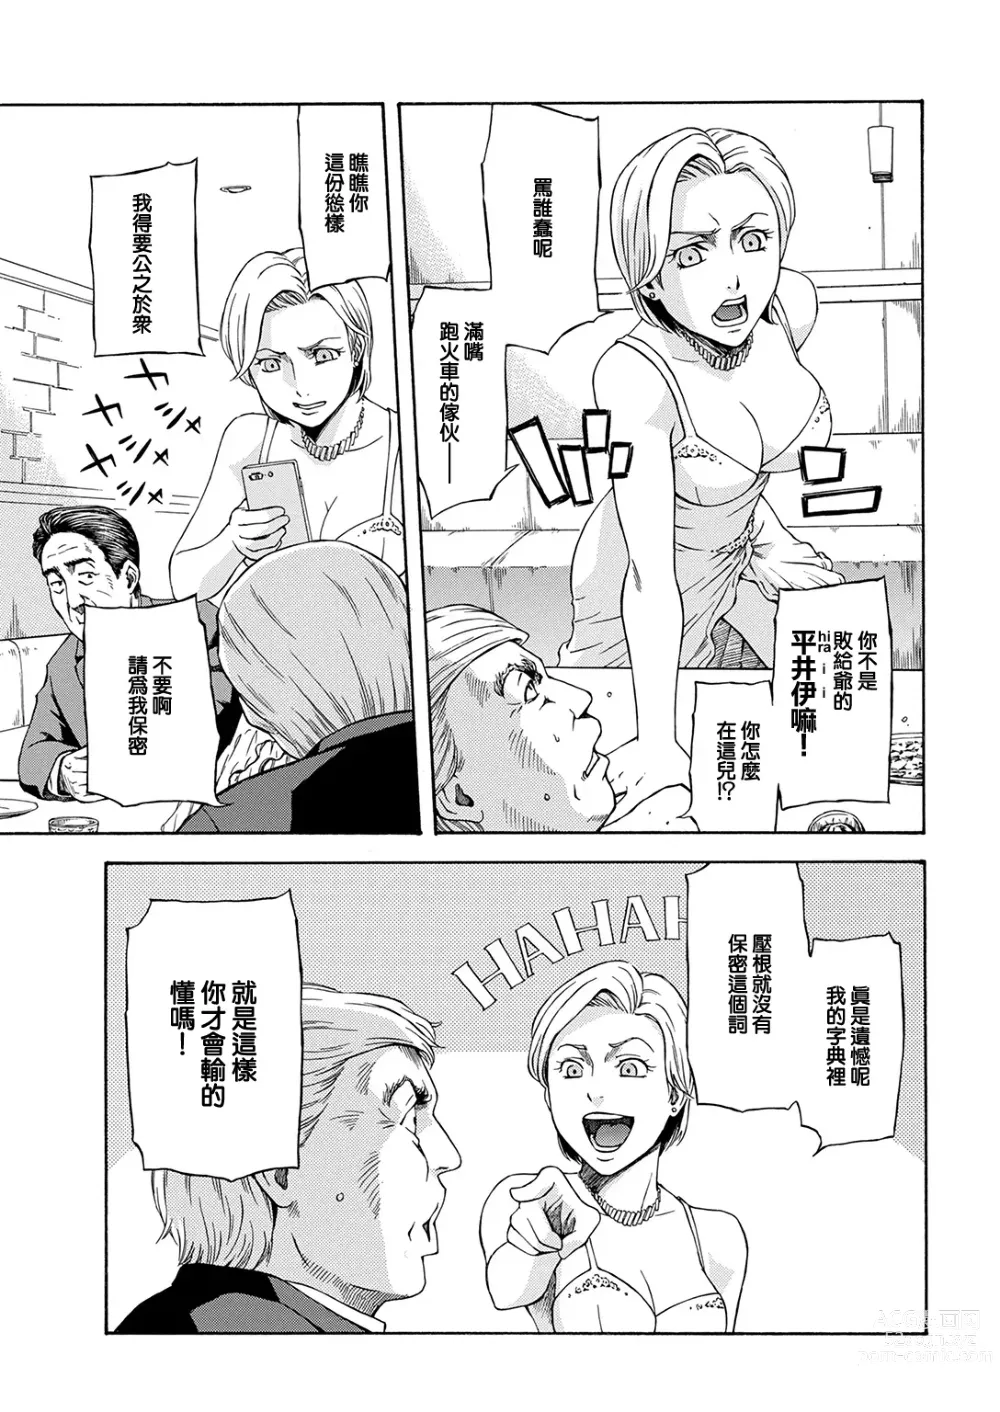 Page 4 of manga Daitouryou no Inbou